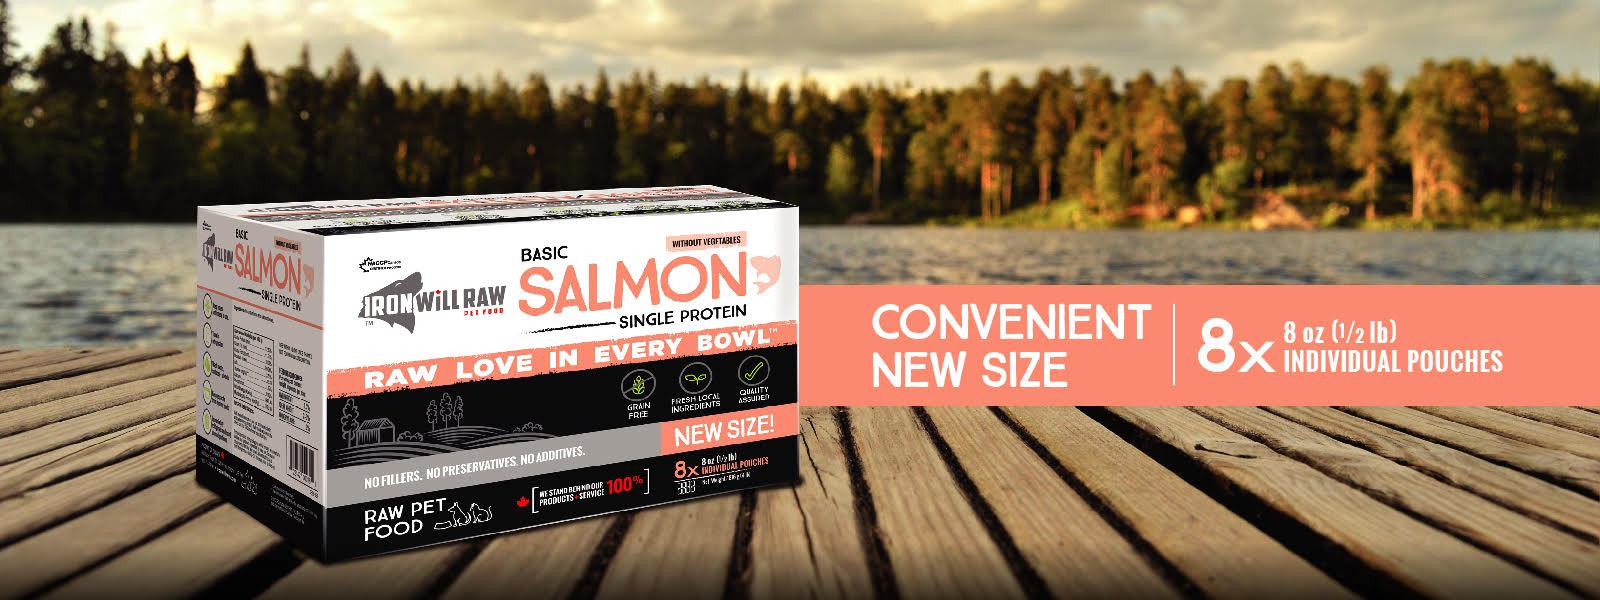 Iron Will Raw Basic Salmon